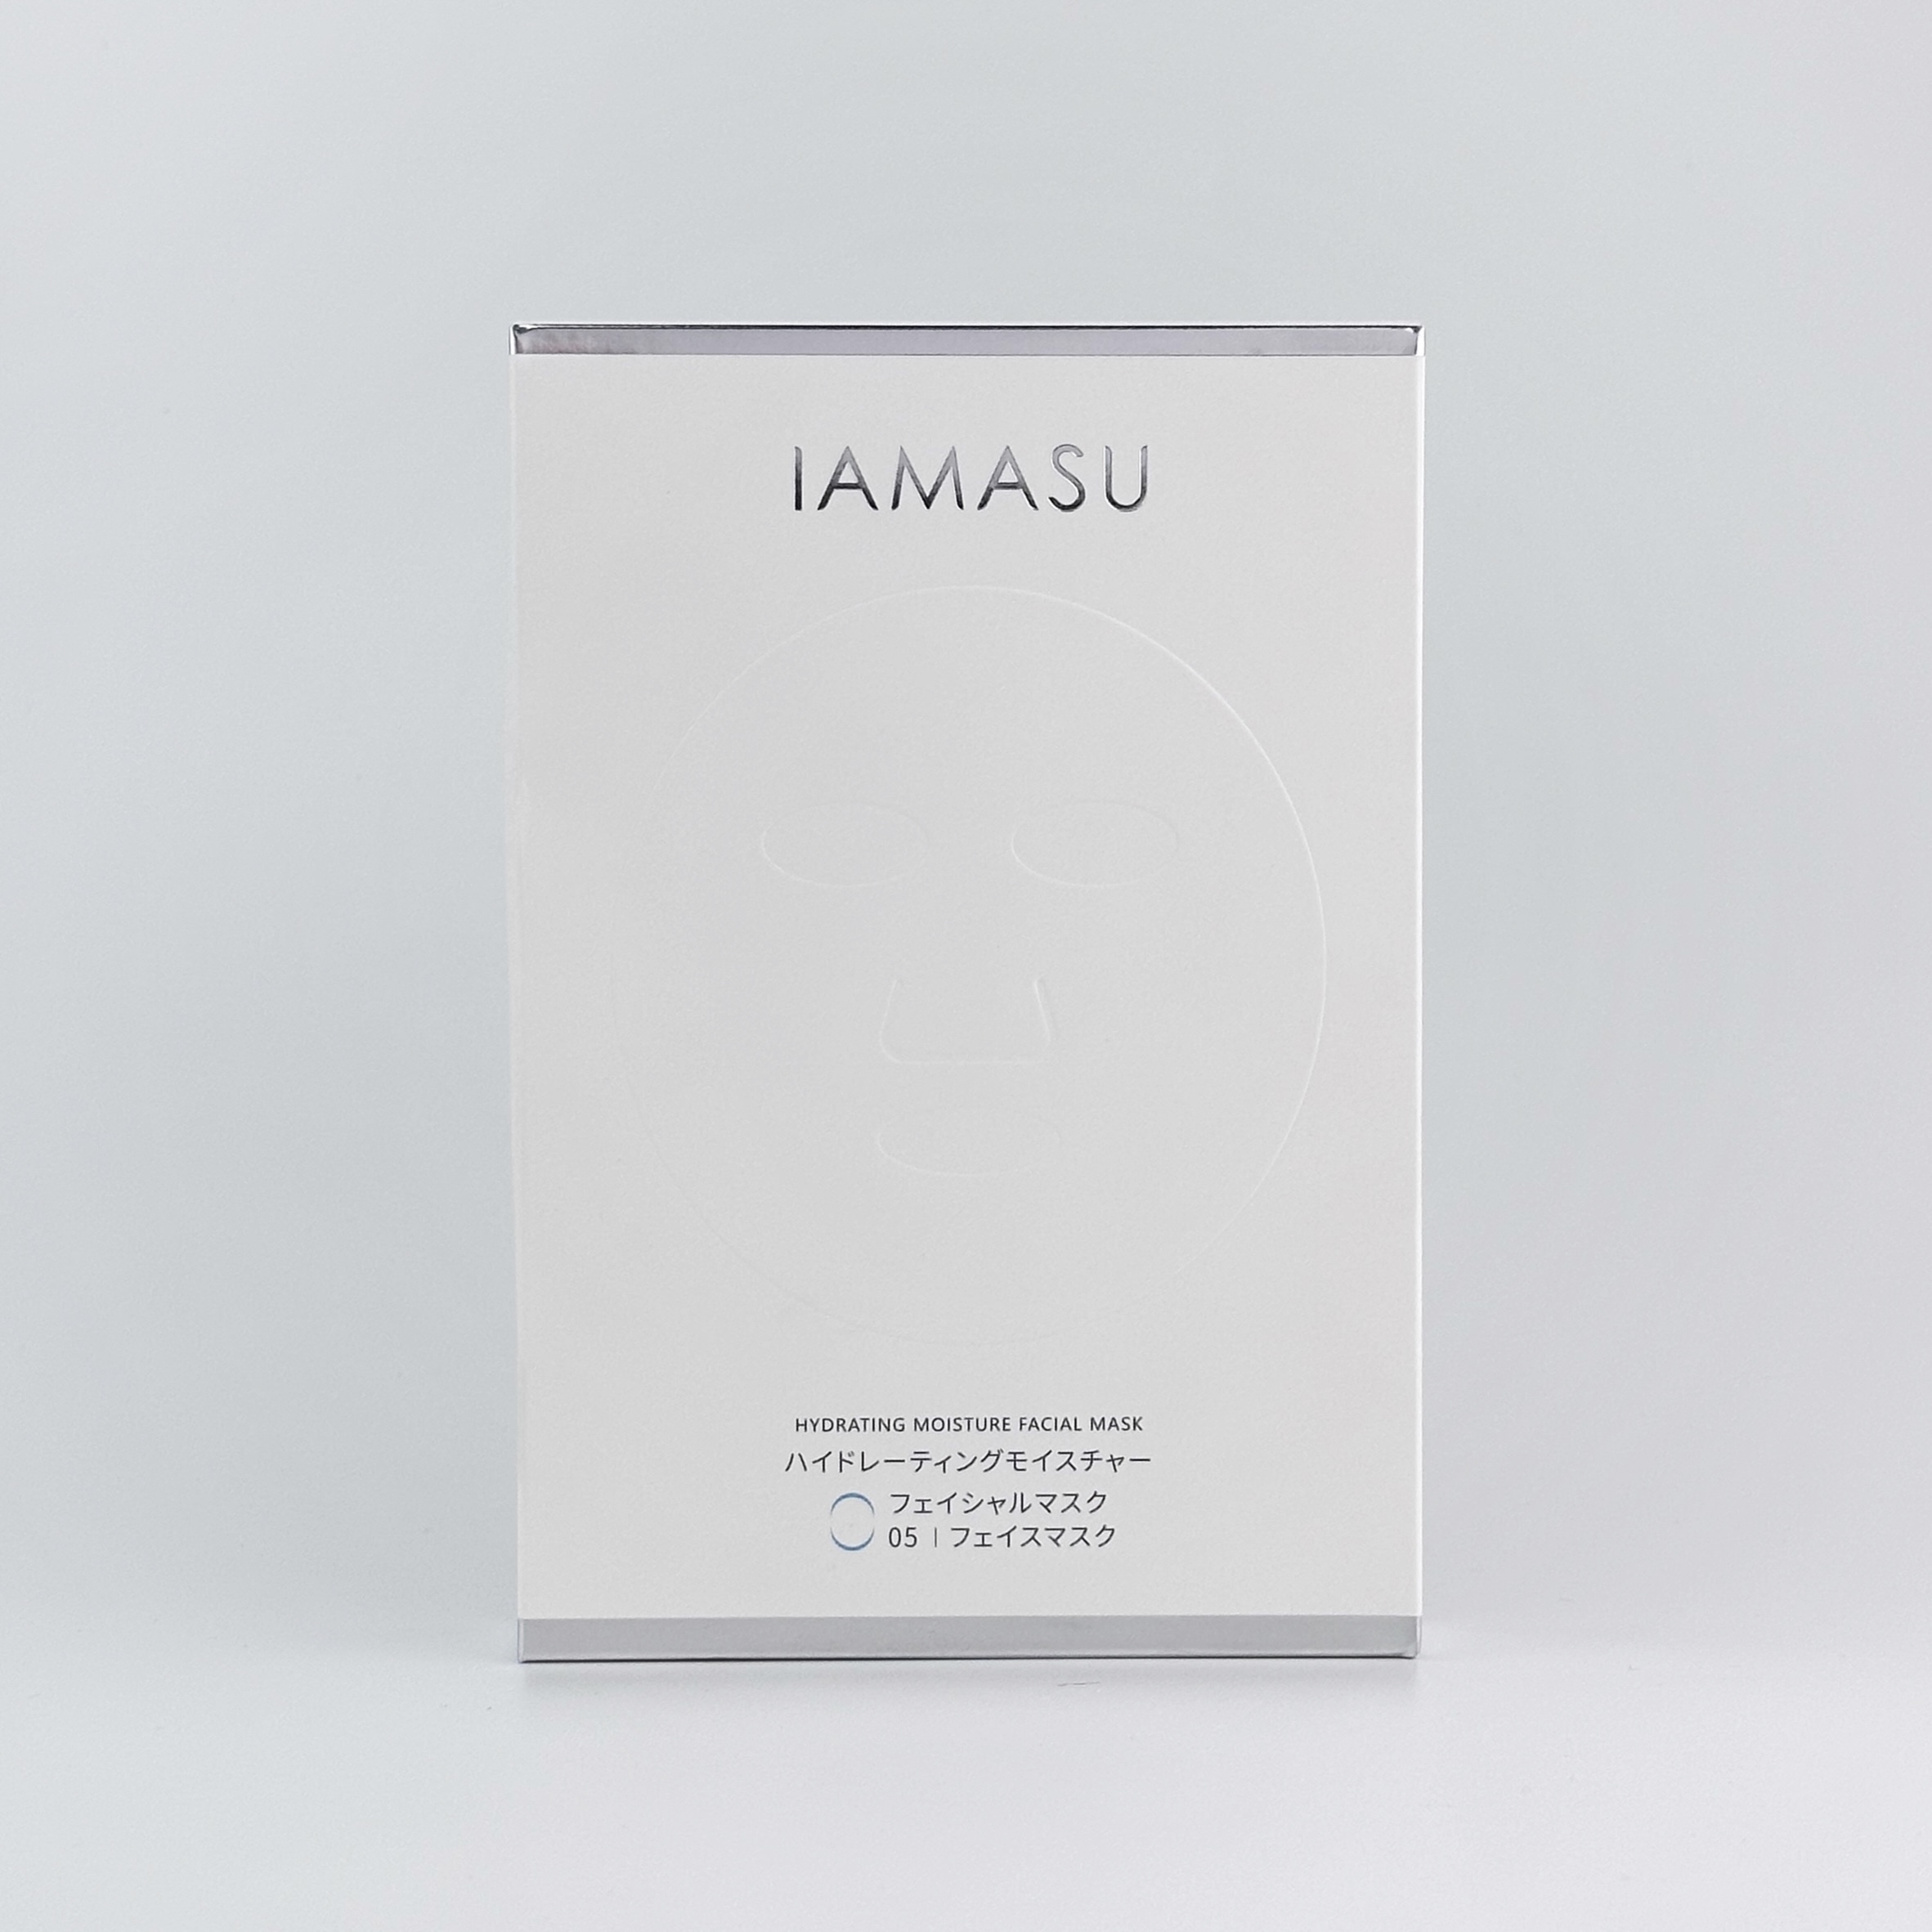 IAMASU Moisturizing Toner - IAMASU (HK) COMPANY LIMITED